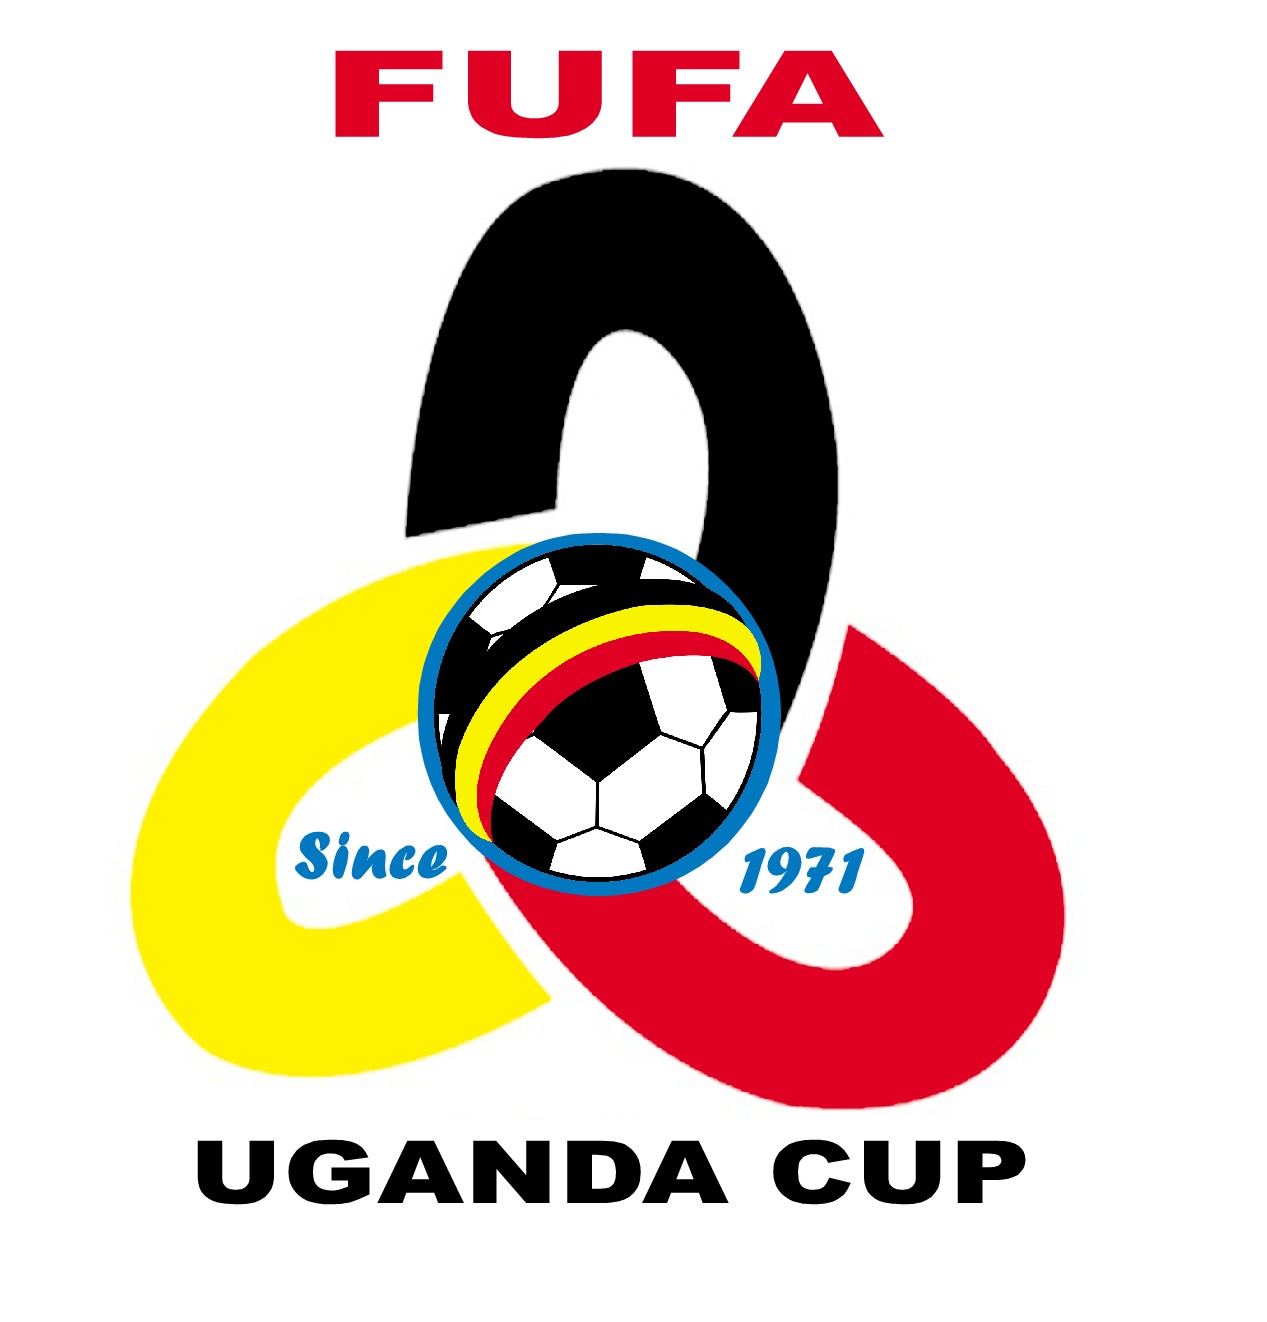 FUFA Uganda Cup